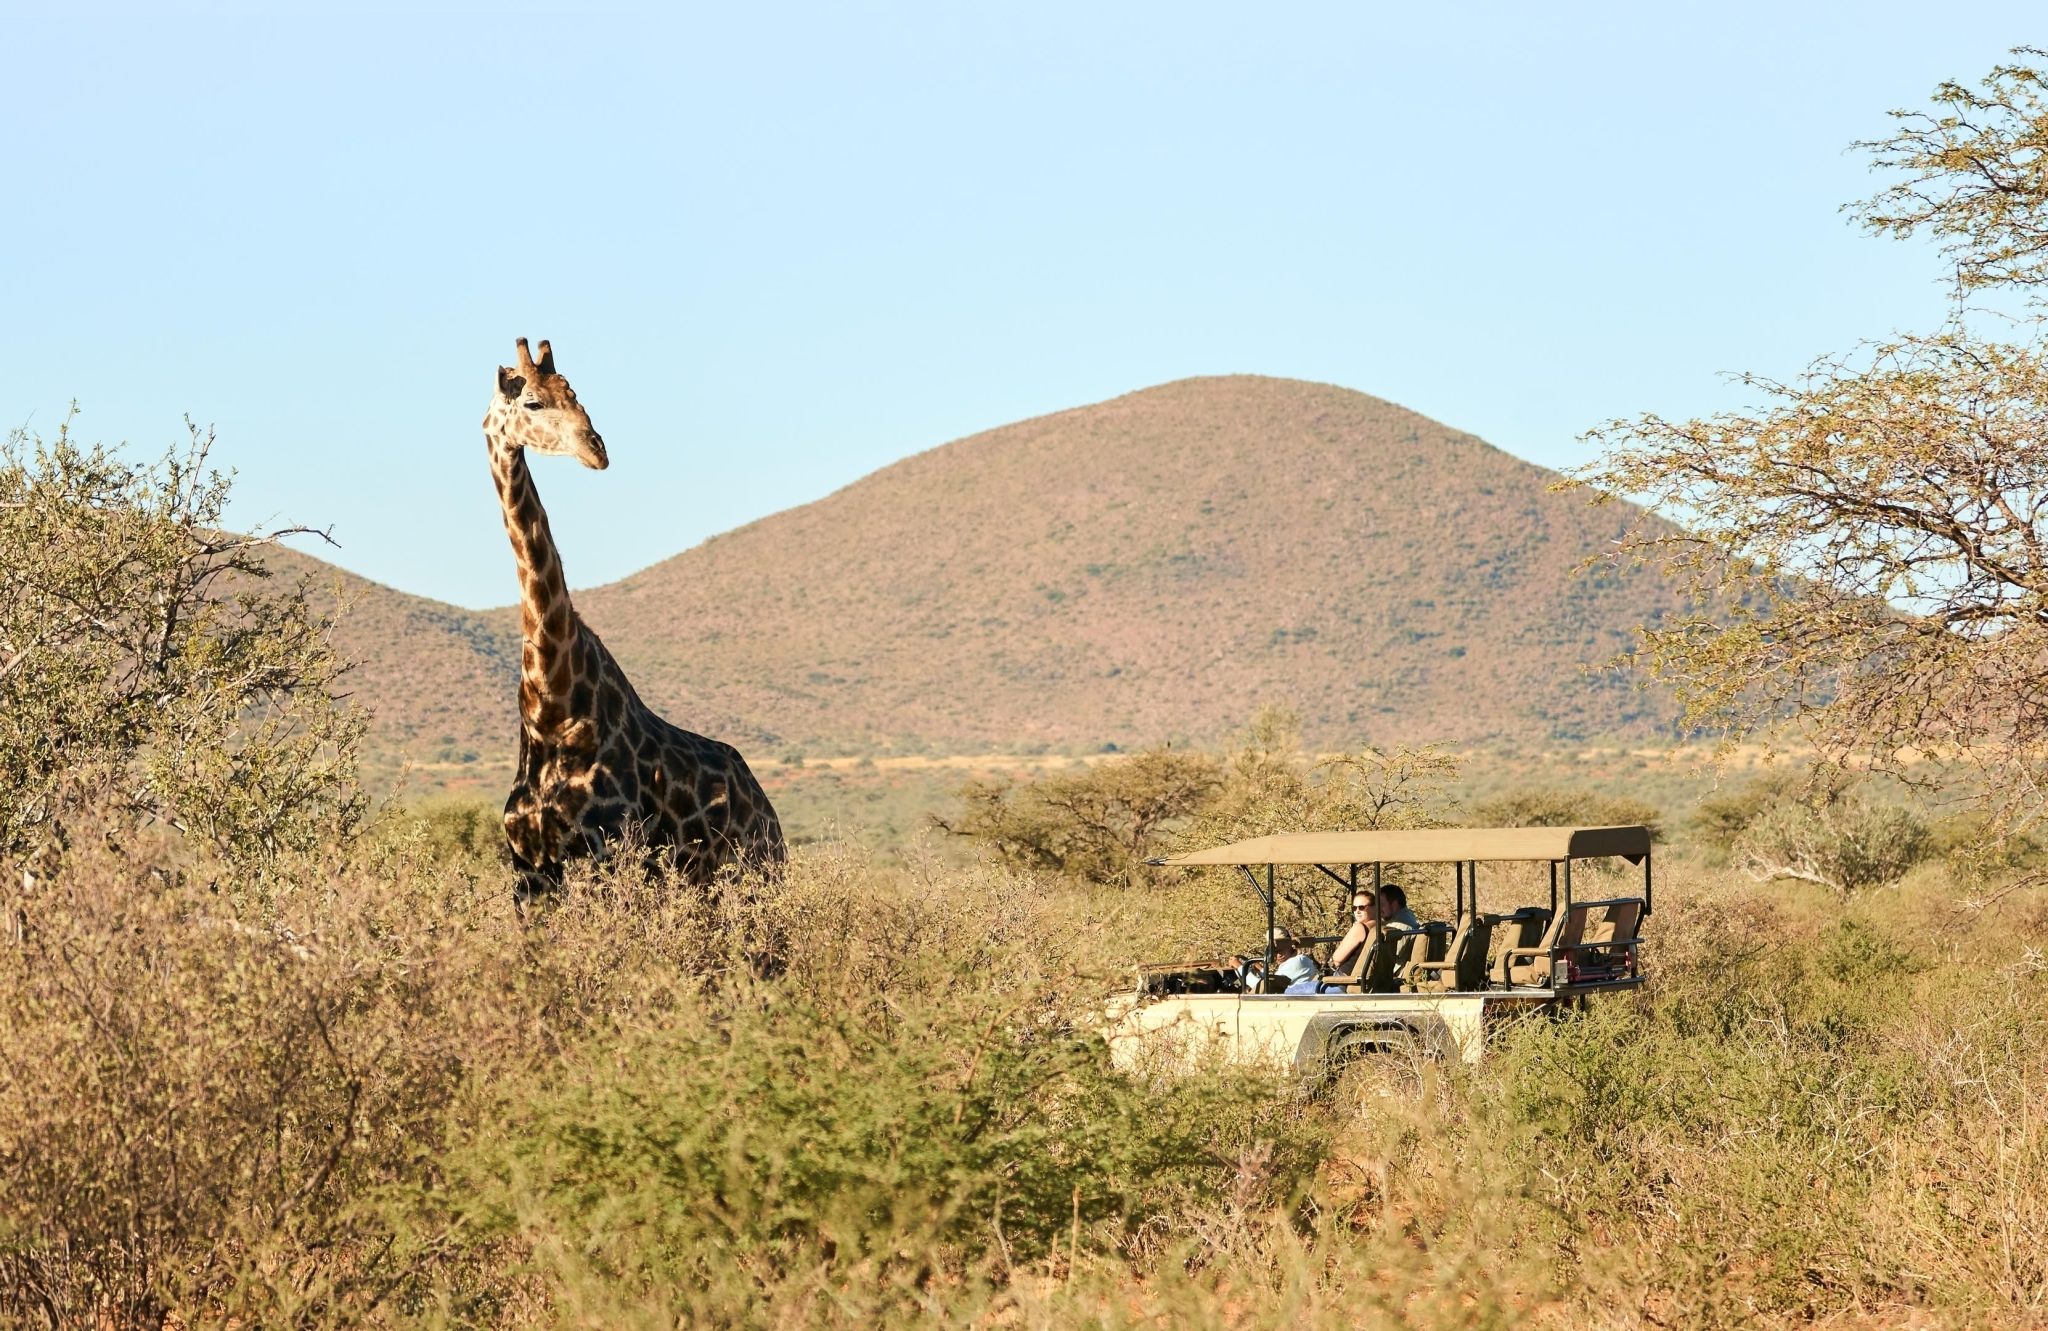 A giraffe peering at a safari jeep.